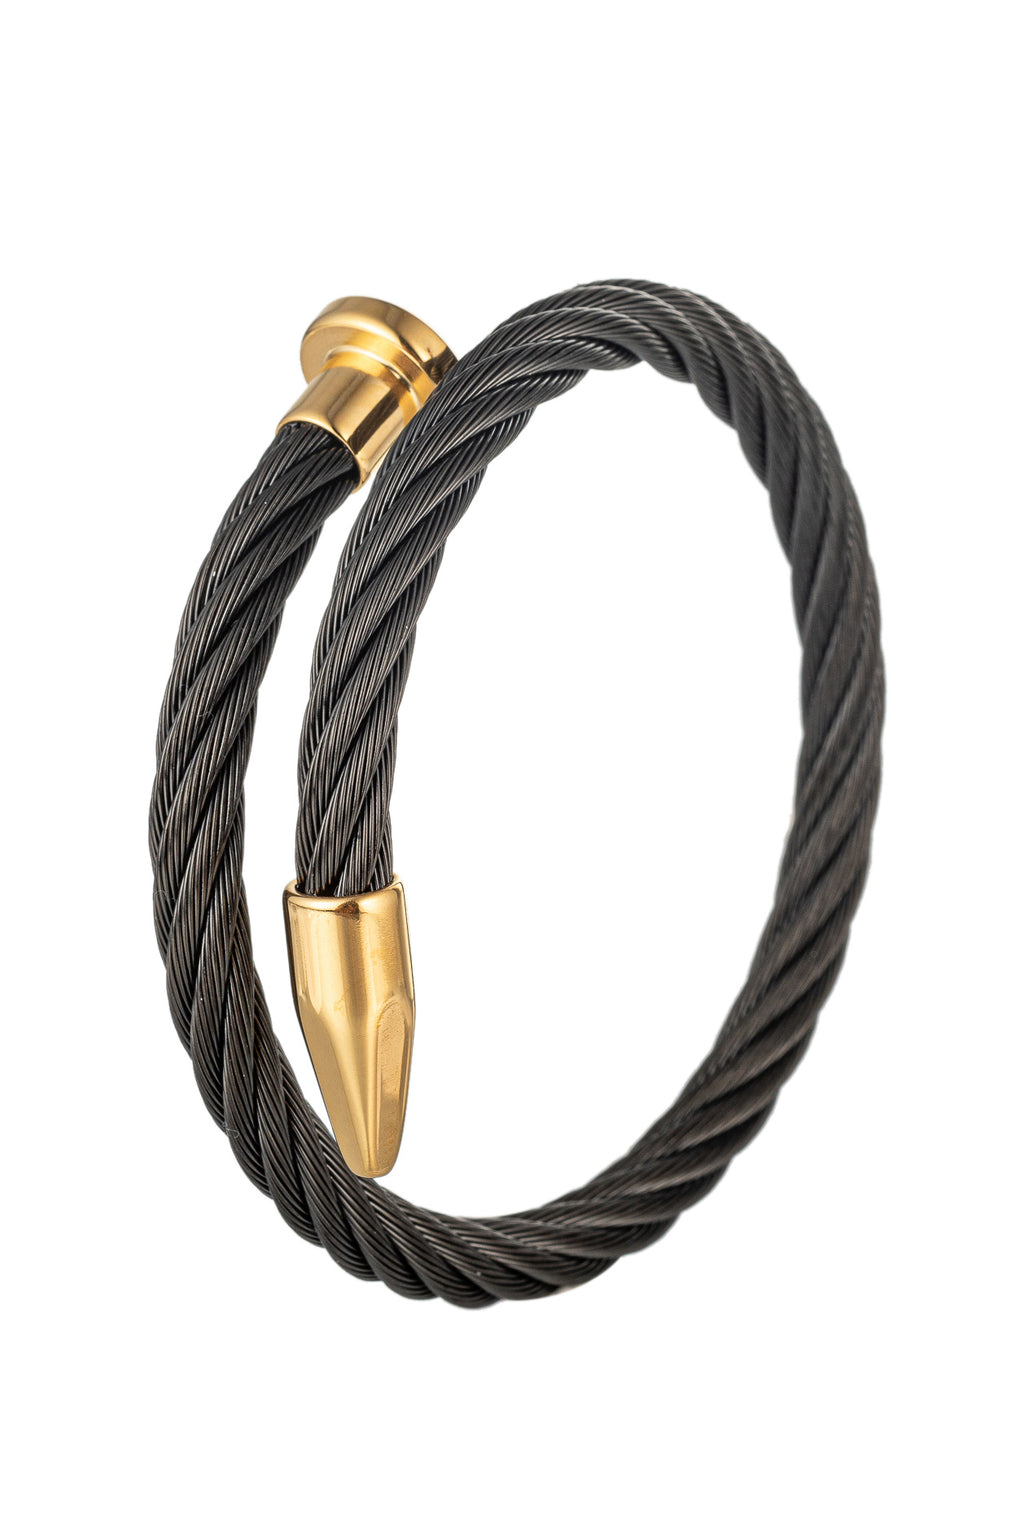 Black tone titanium cuff bracelet with gold spike ends.